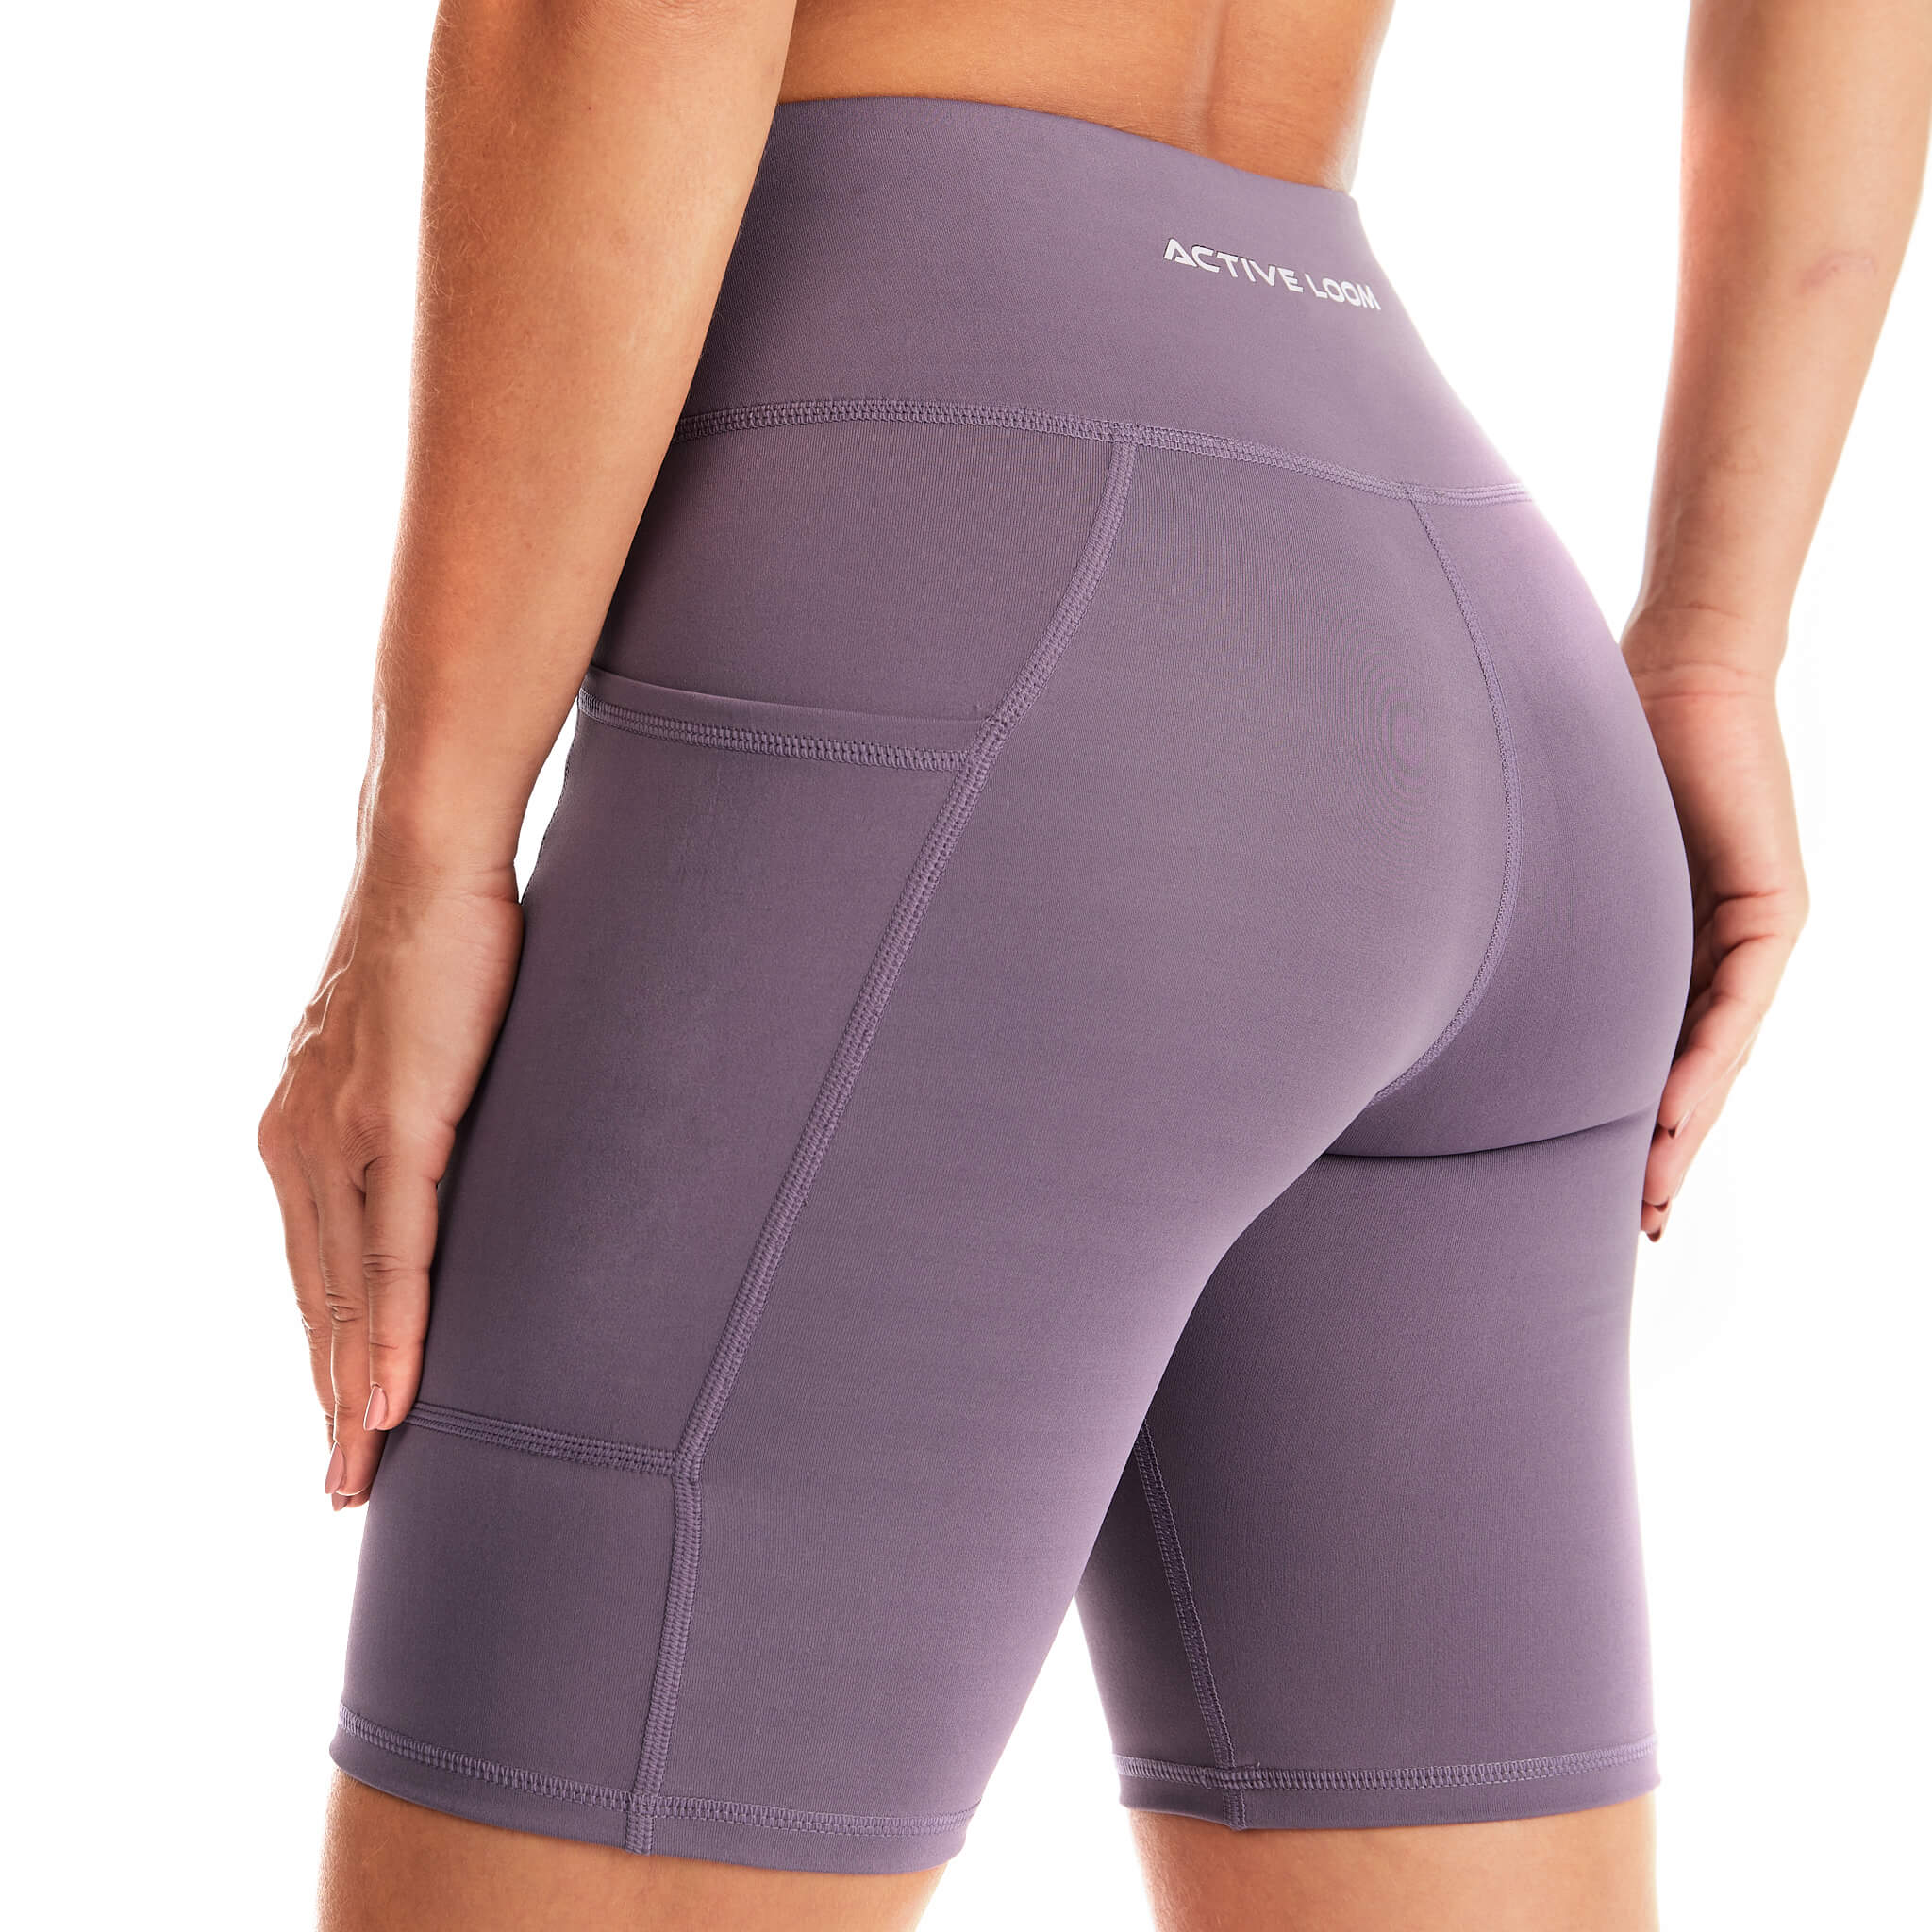 AL Biker Shorts- Dusty purple - Active Loom